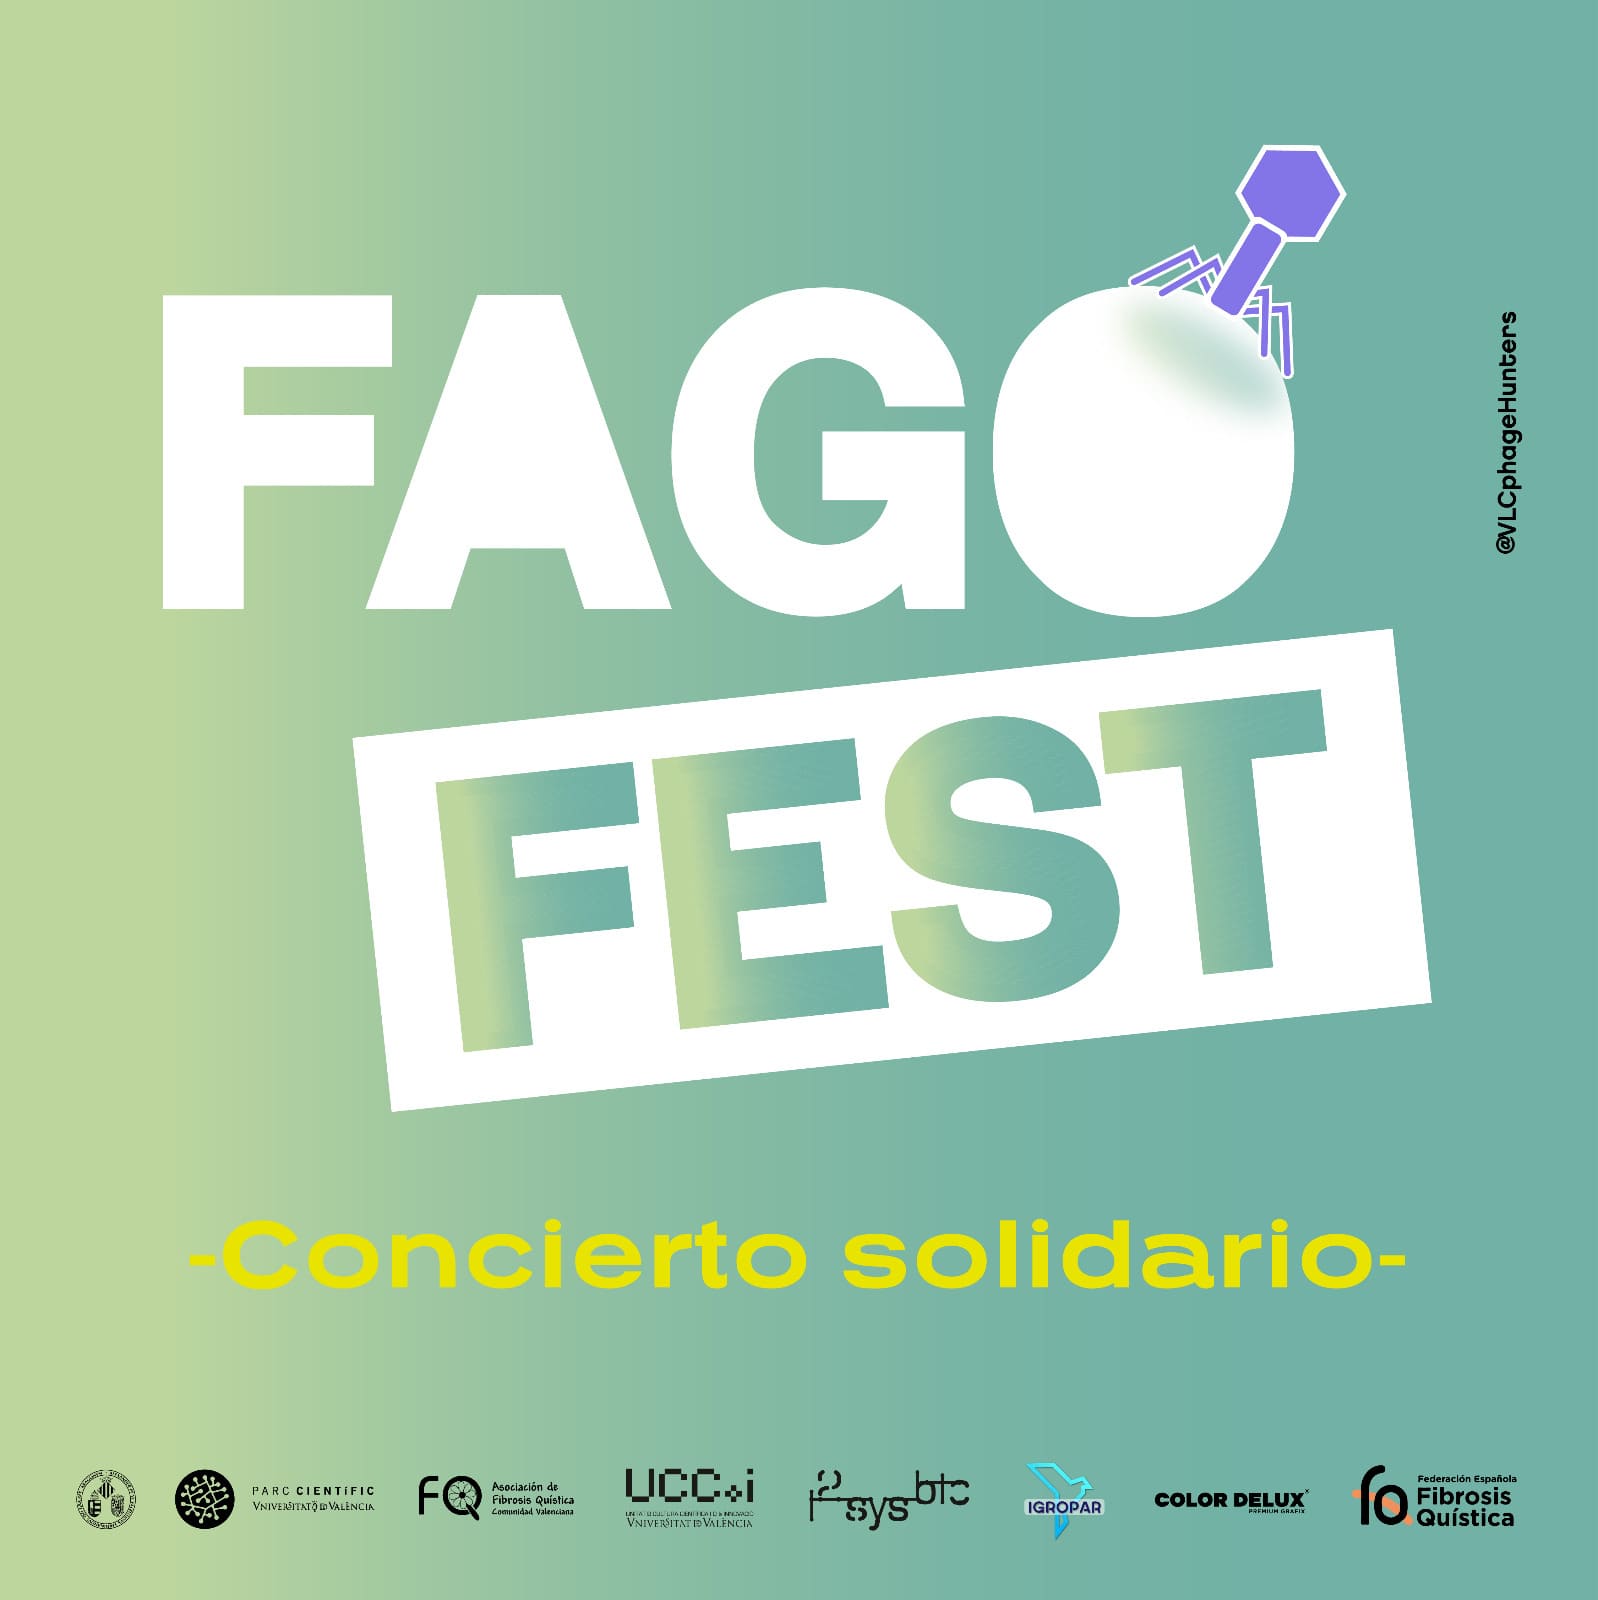 Logo festival Fago FEST por la fagoterapia